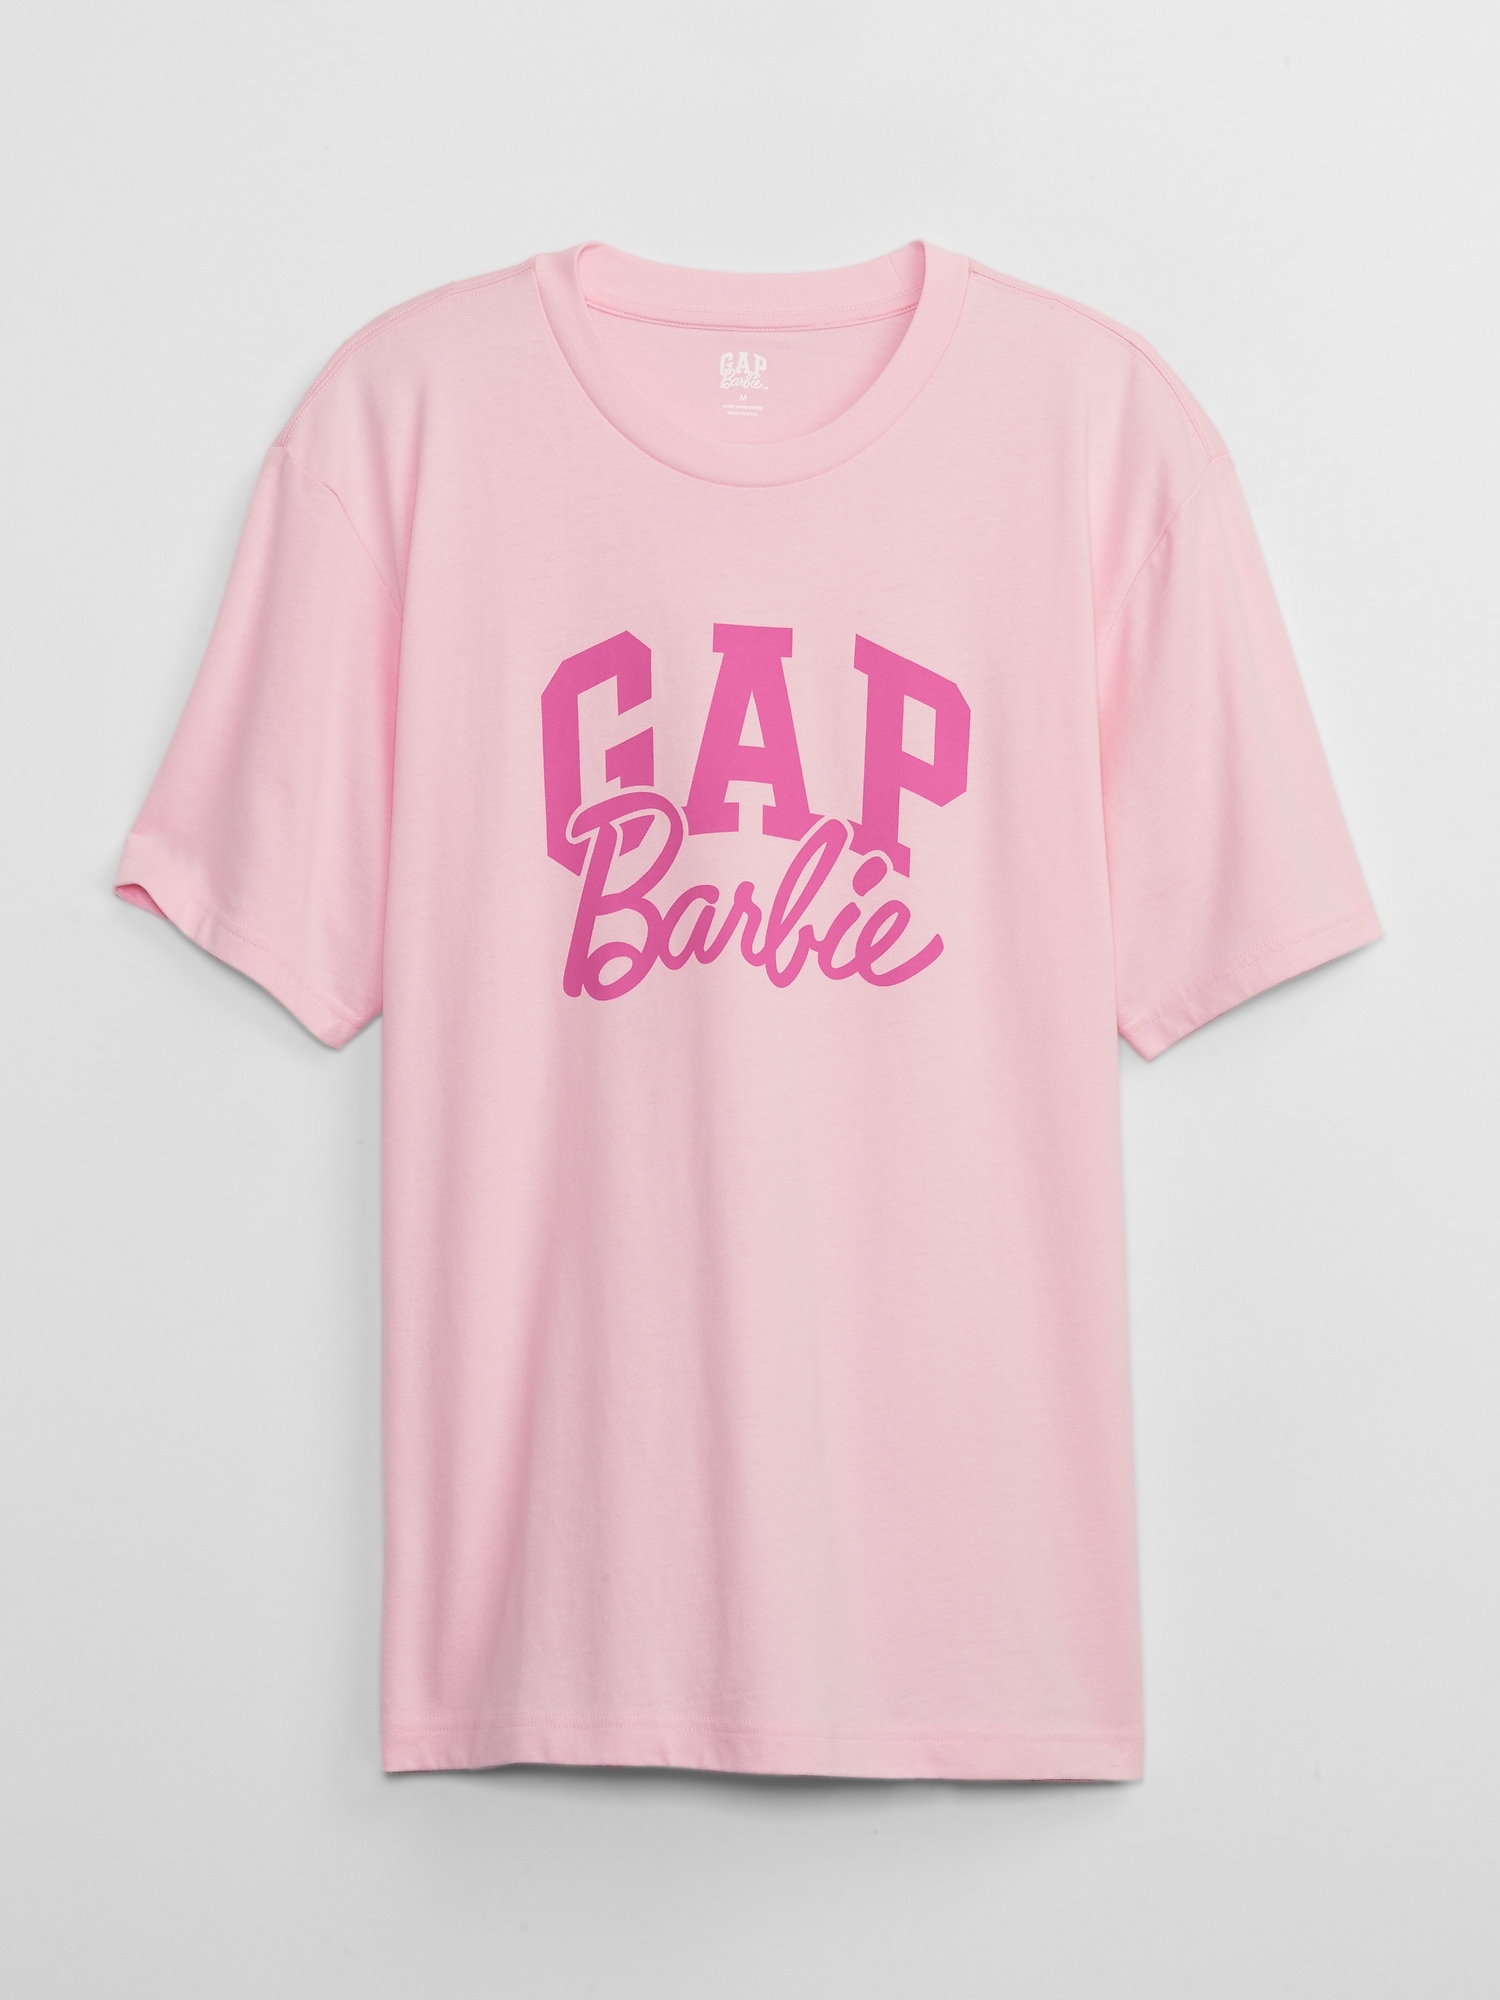 Barbie™ White Graphic Boyfriend T-Shirt